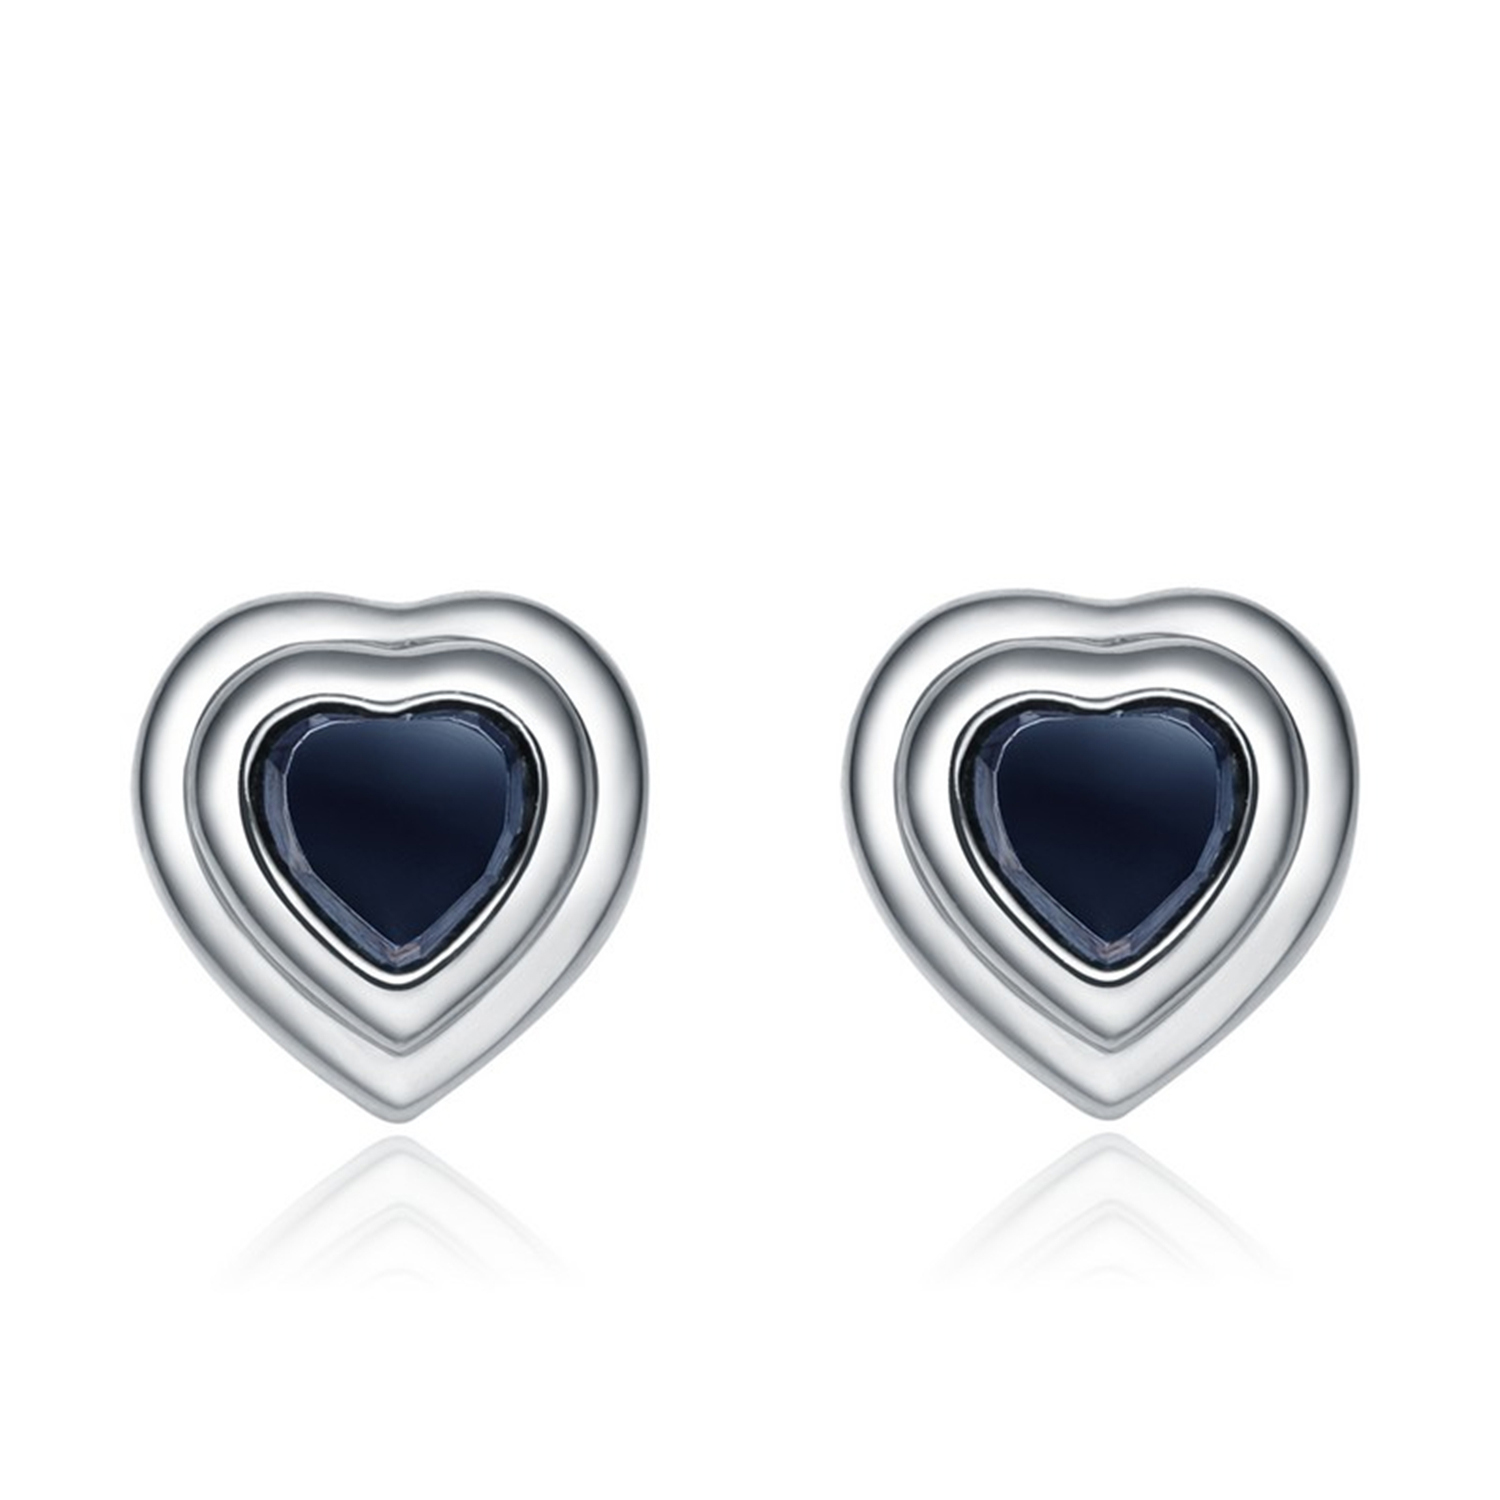 Jewelry Manufacturer 925 sterling silver rhodium plated cz heart stud earrings jewelry women(图1)